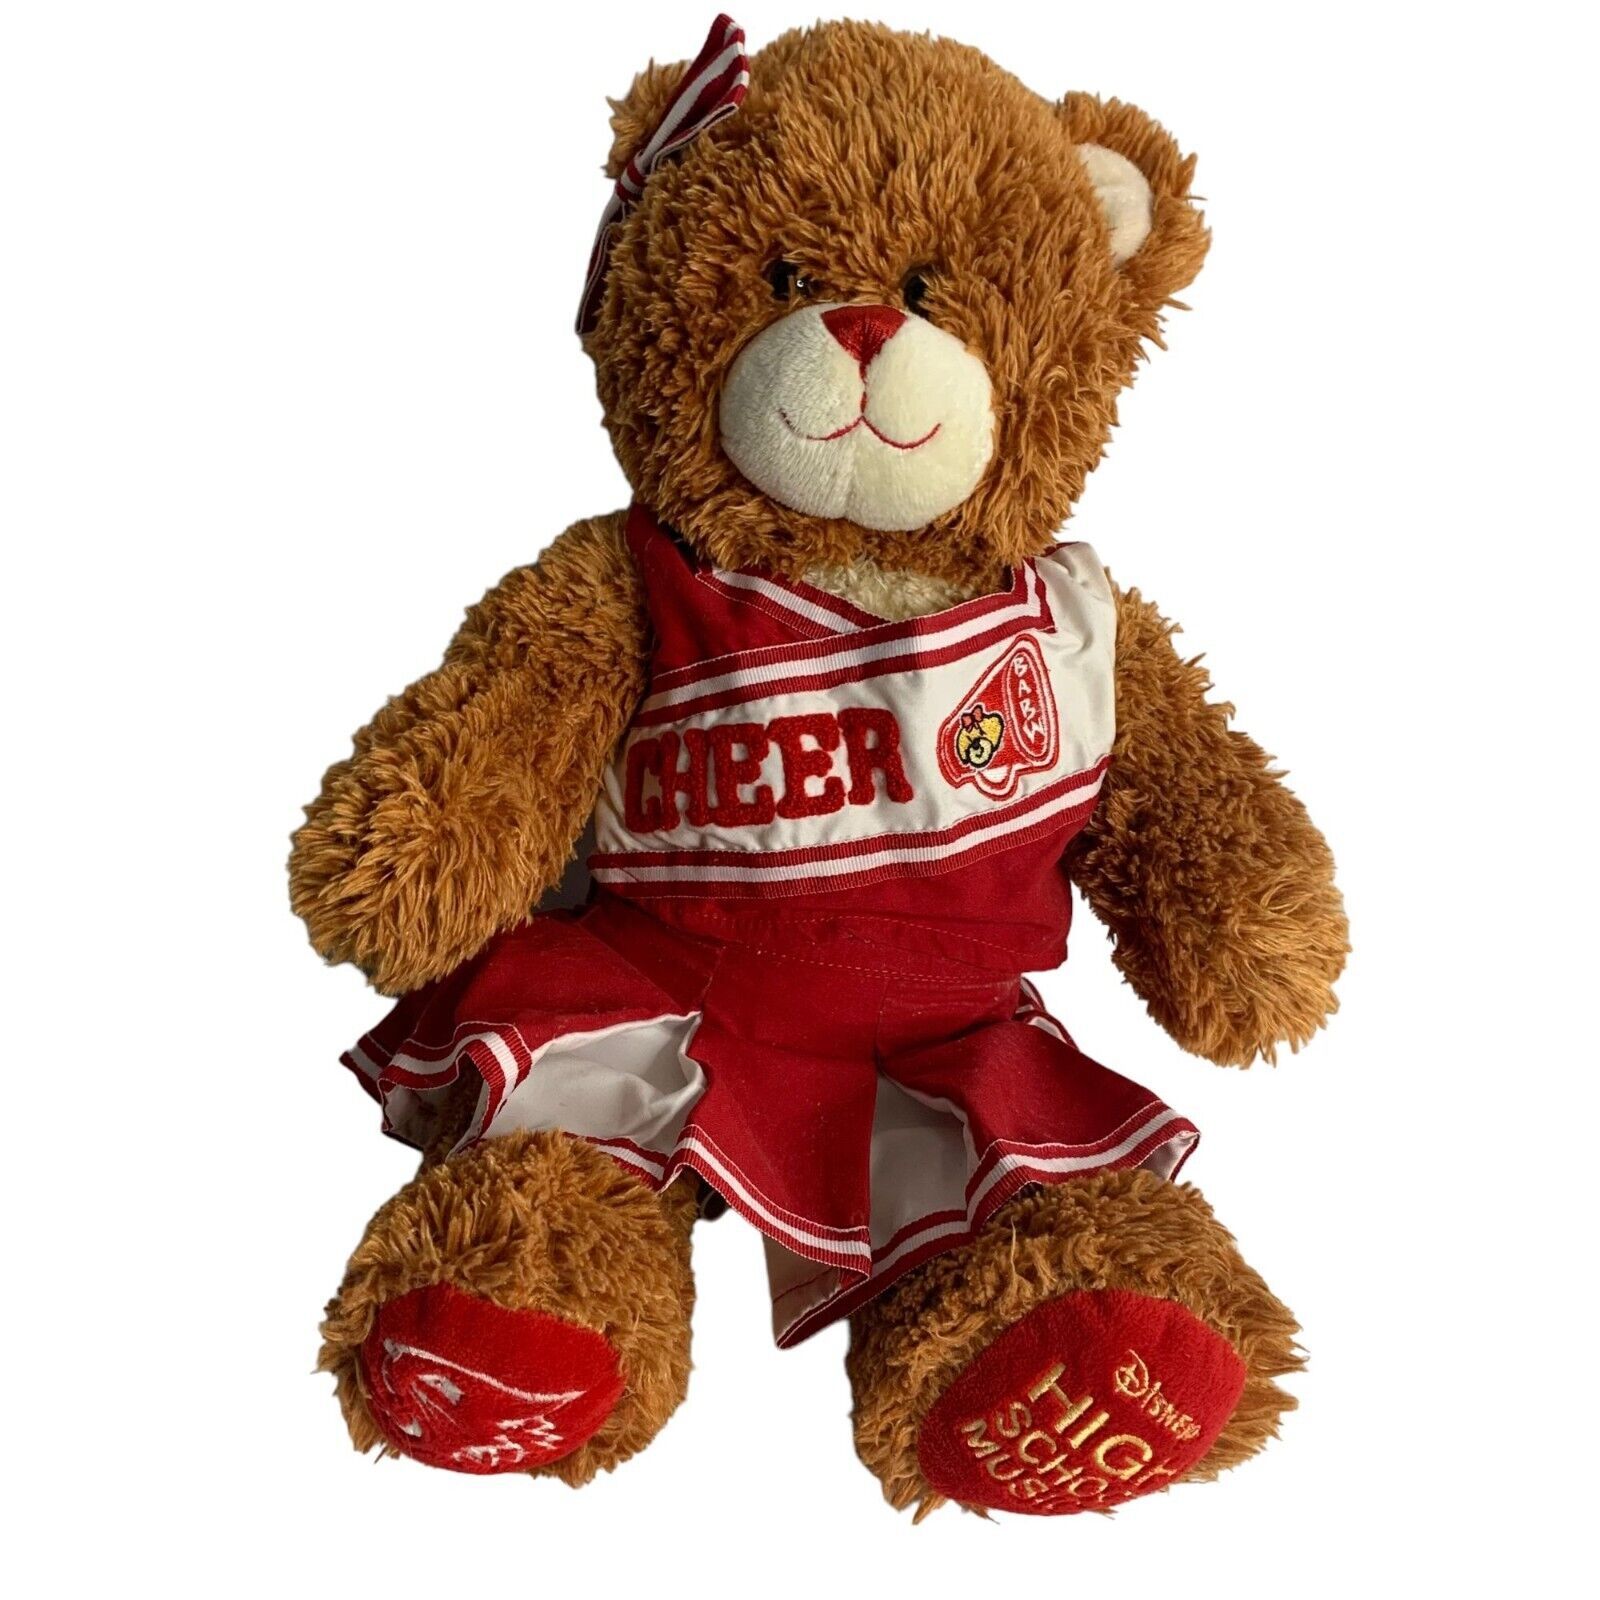 Primary image for Disney High School Musical Build a Bear 16 in Cheerleader Plush Stuffed Animal